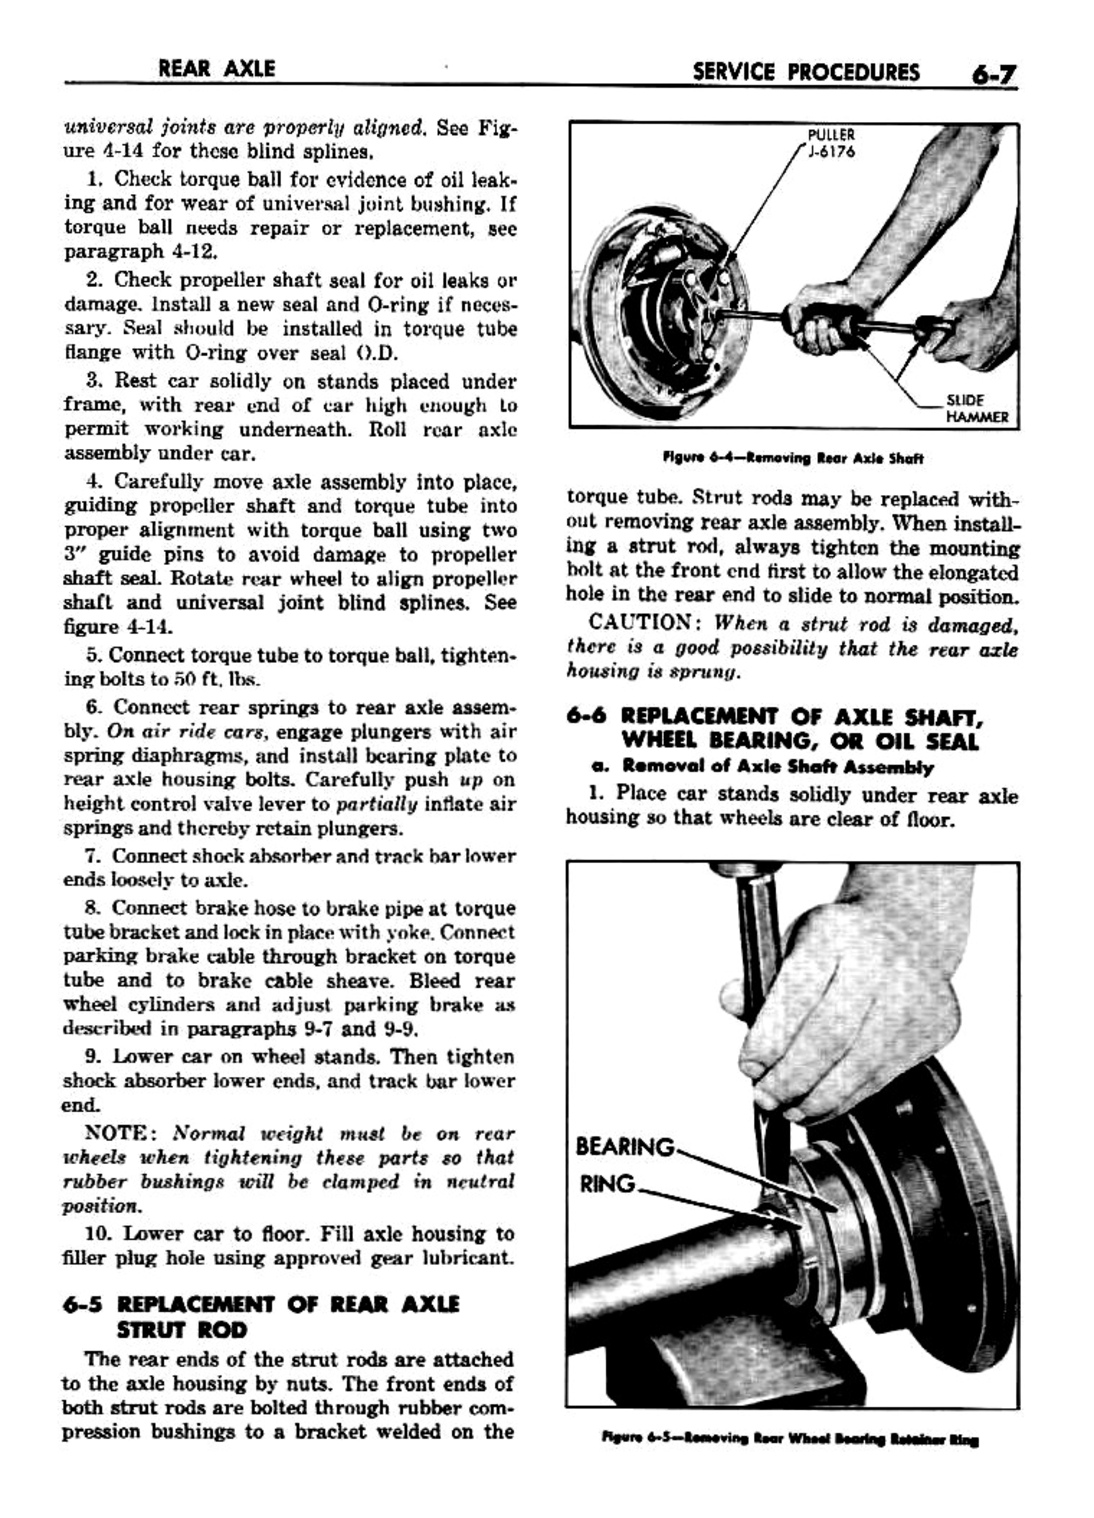 n_07 1959 Buick Shop Manual - Rear Axle-007-007.jpg